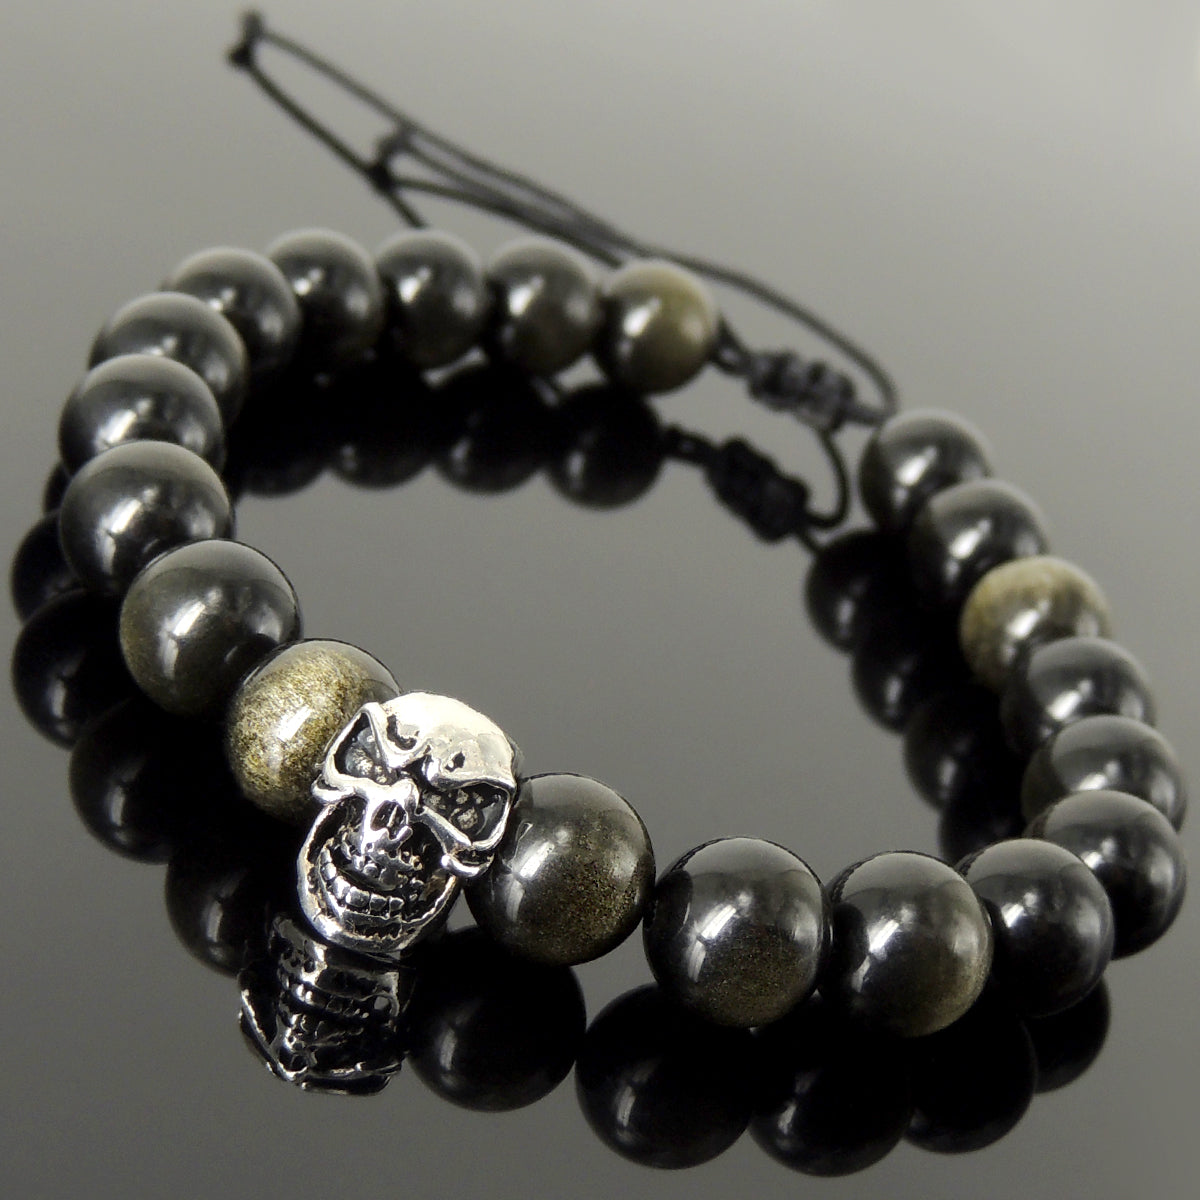 Biker Life Skull Gemstone Jewelry - Men's Women's Handmade Braided Bracelet Protection, Casual Wear with 10mm Golden Obsidian, Adjustable Drawstring, S925 Sterling Silver Bead BR1727